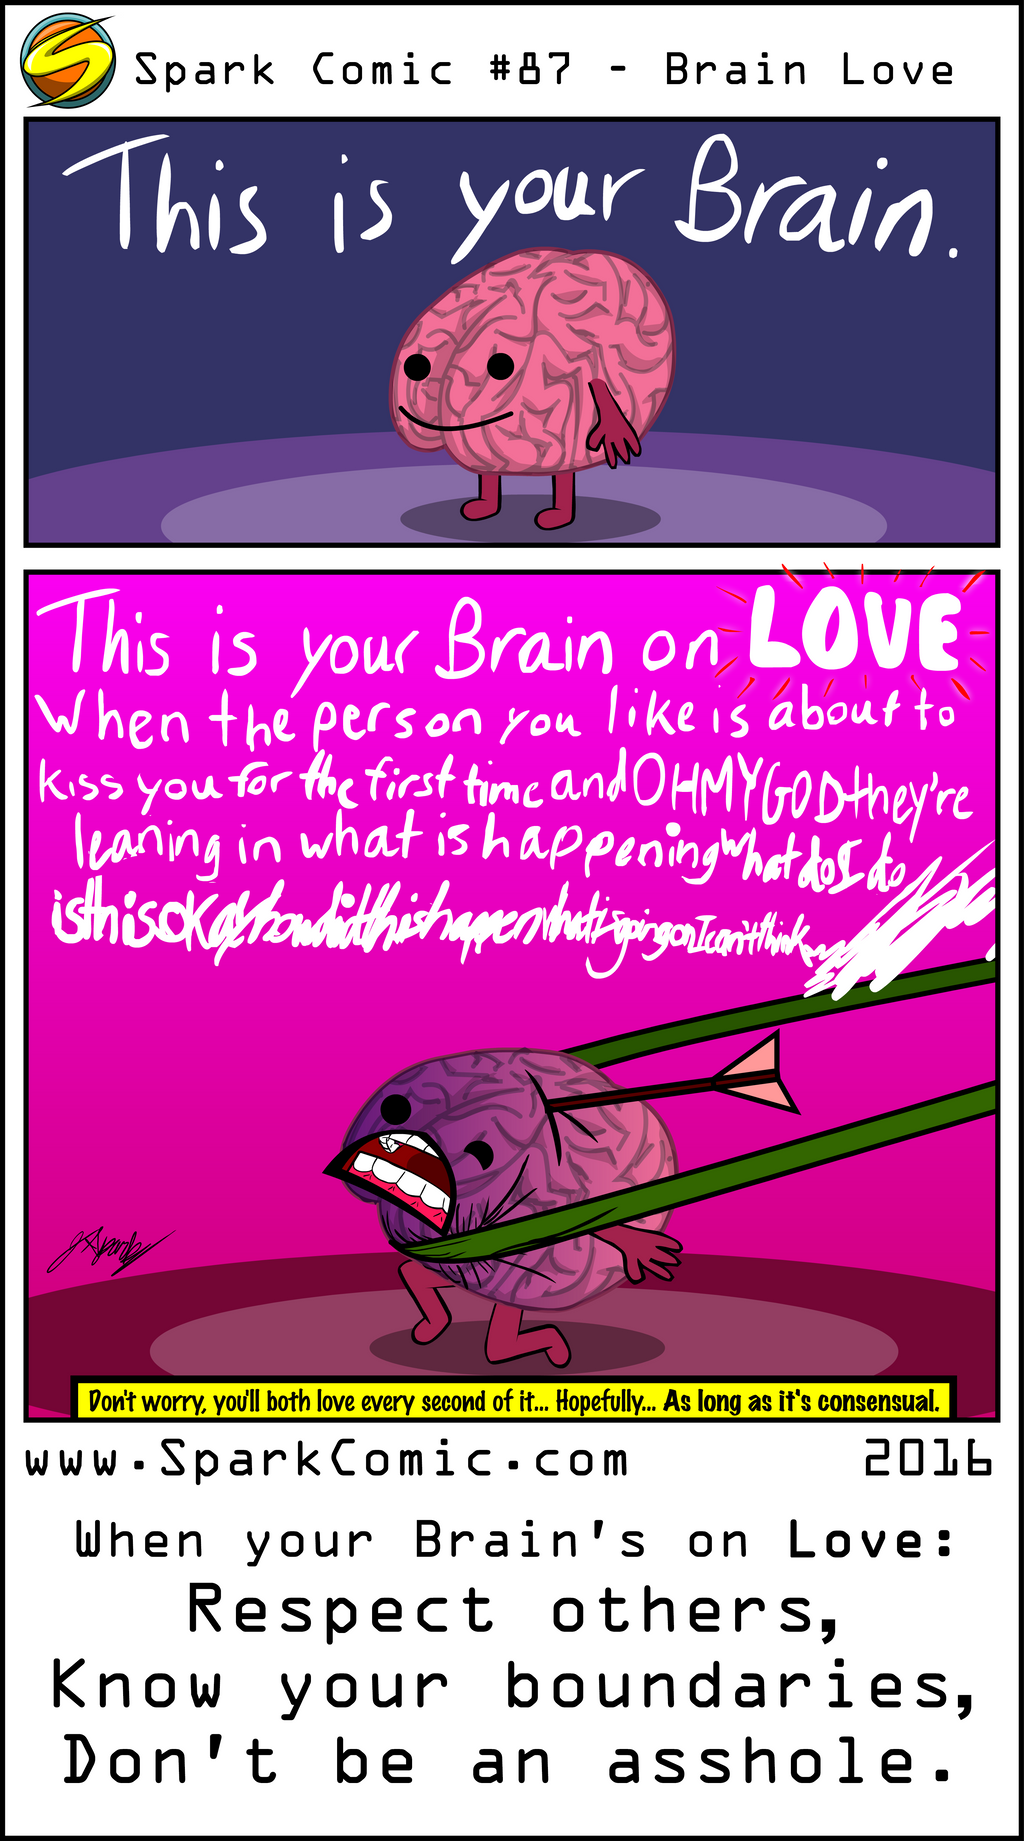 Spark Comic #87 - Brain Love